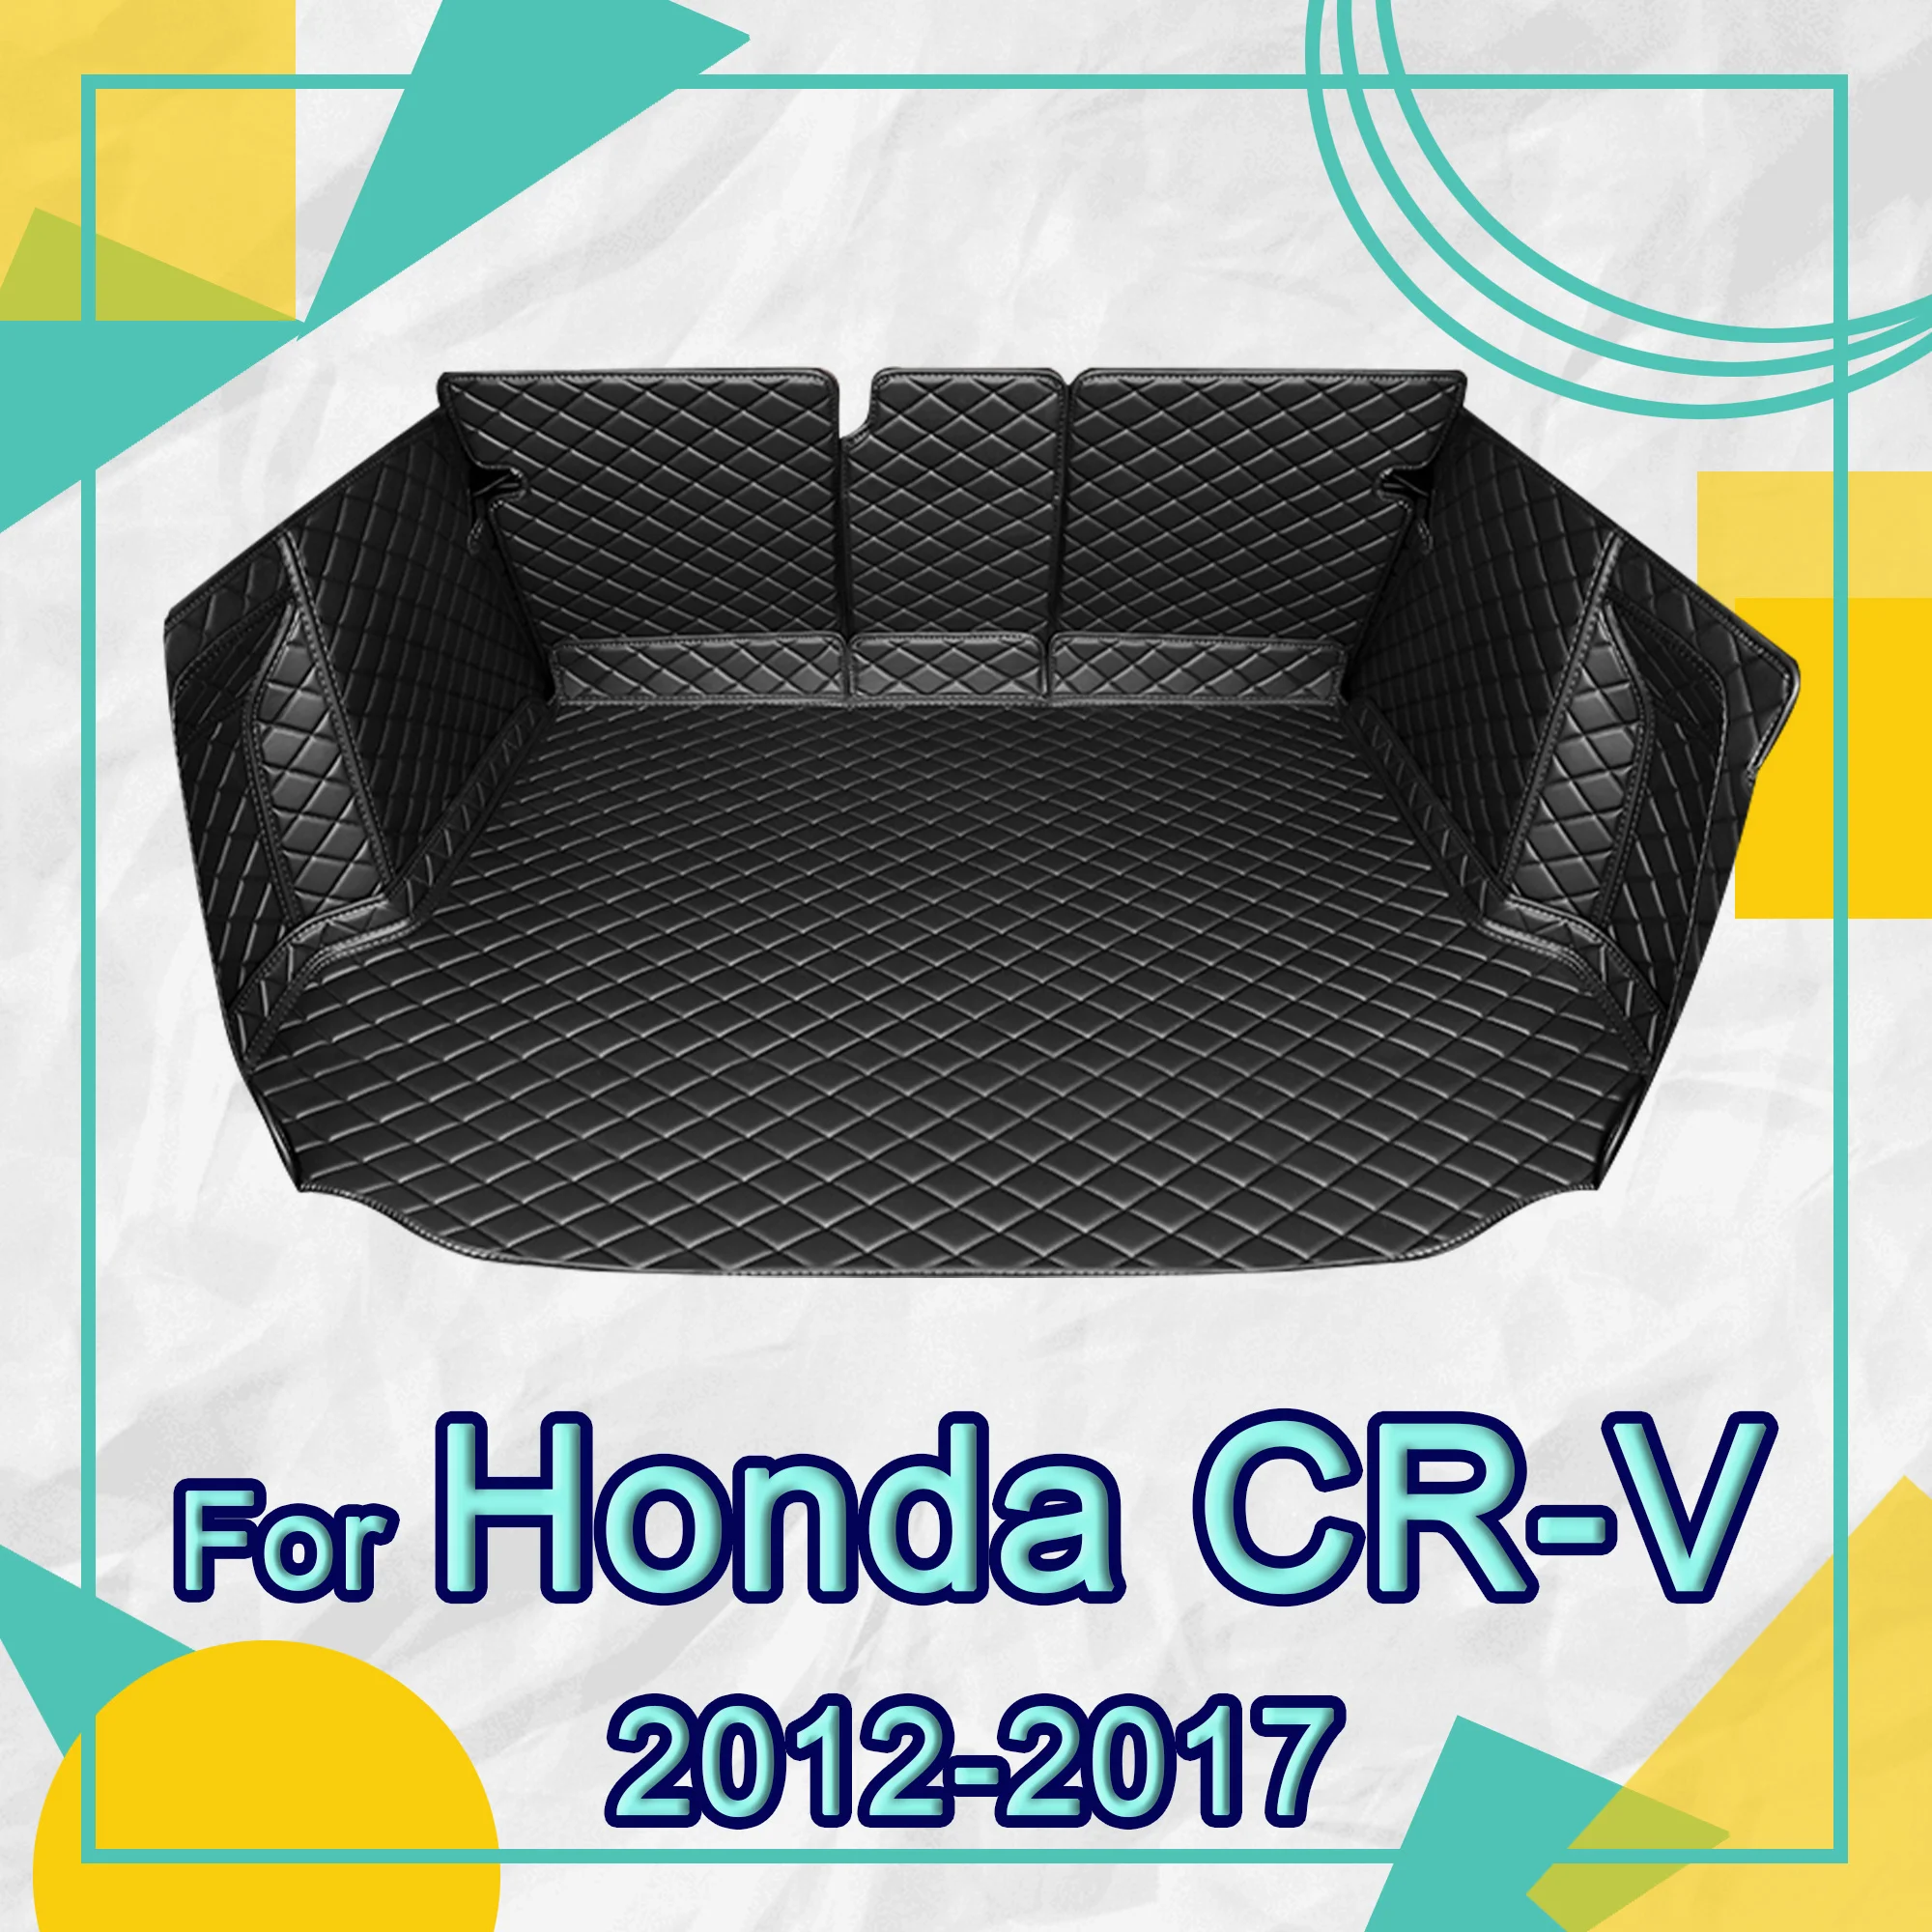 

Коврик для багажника автомобиля APPDEE для Honda CRV 2012 2013 2014 2015 2016 2017